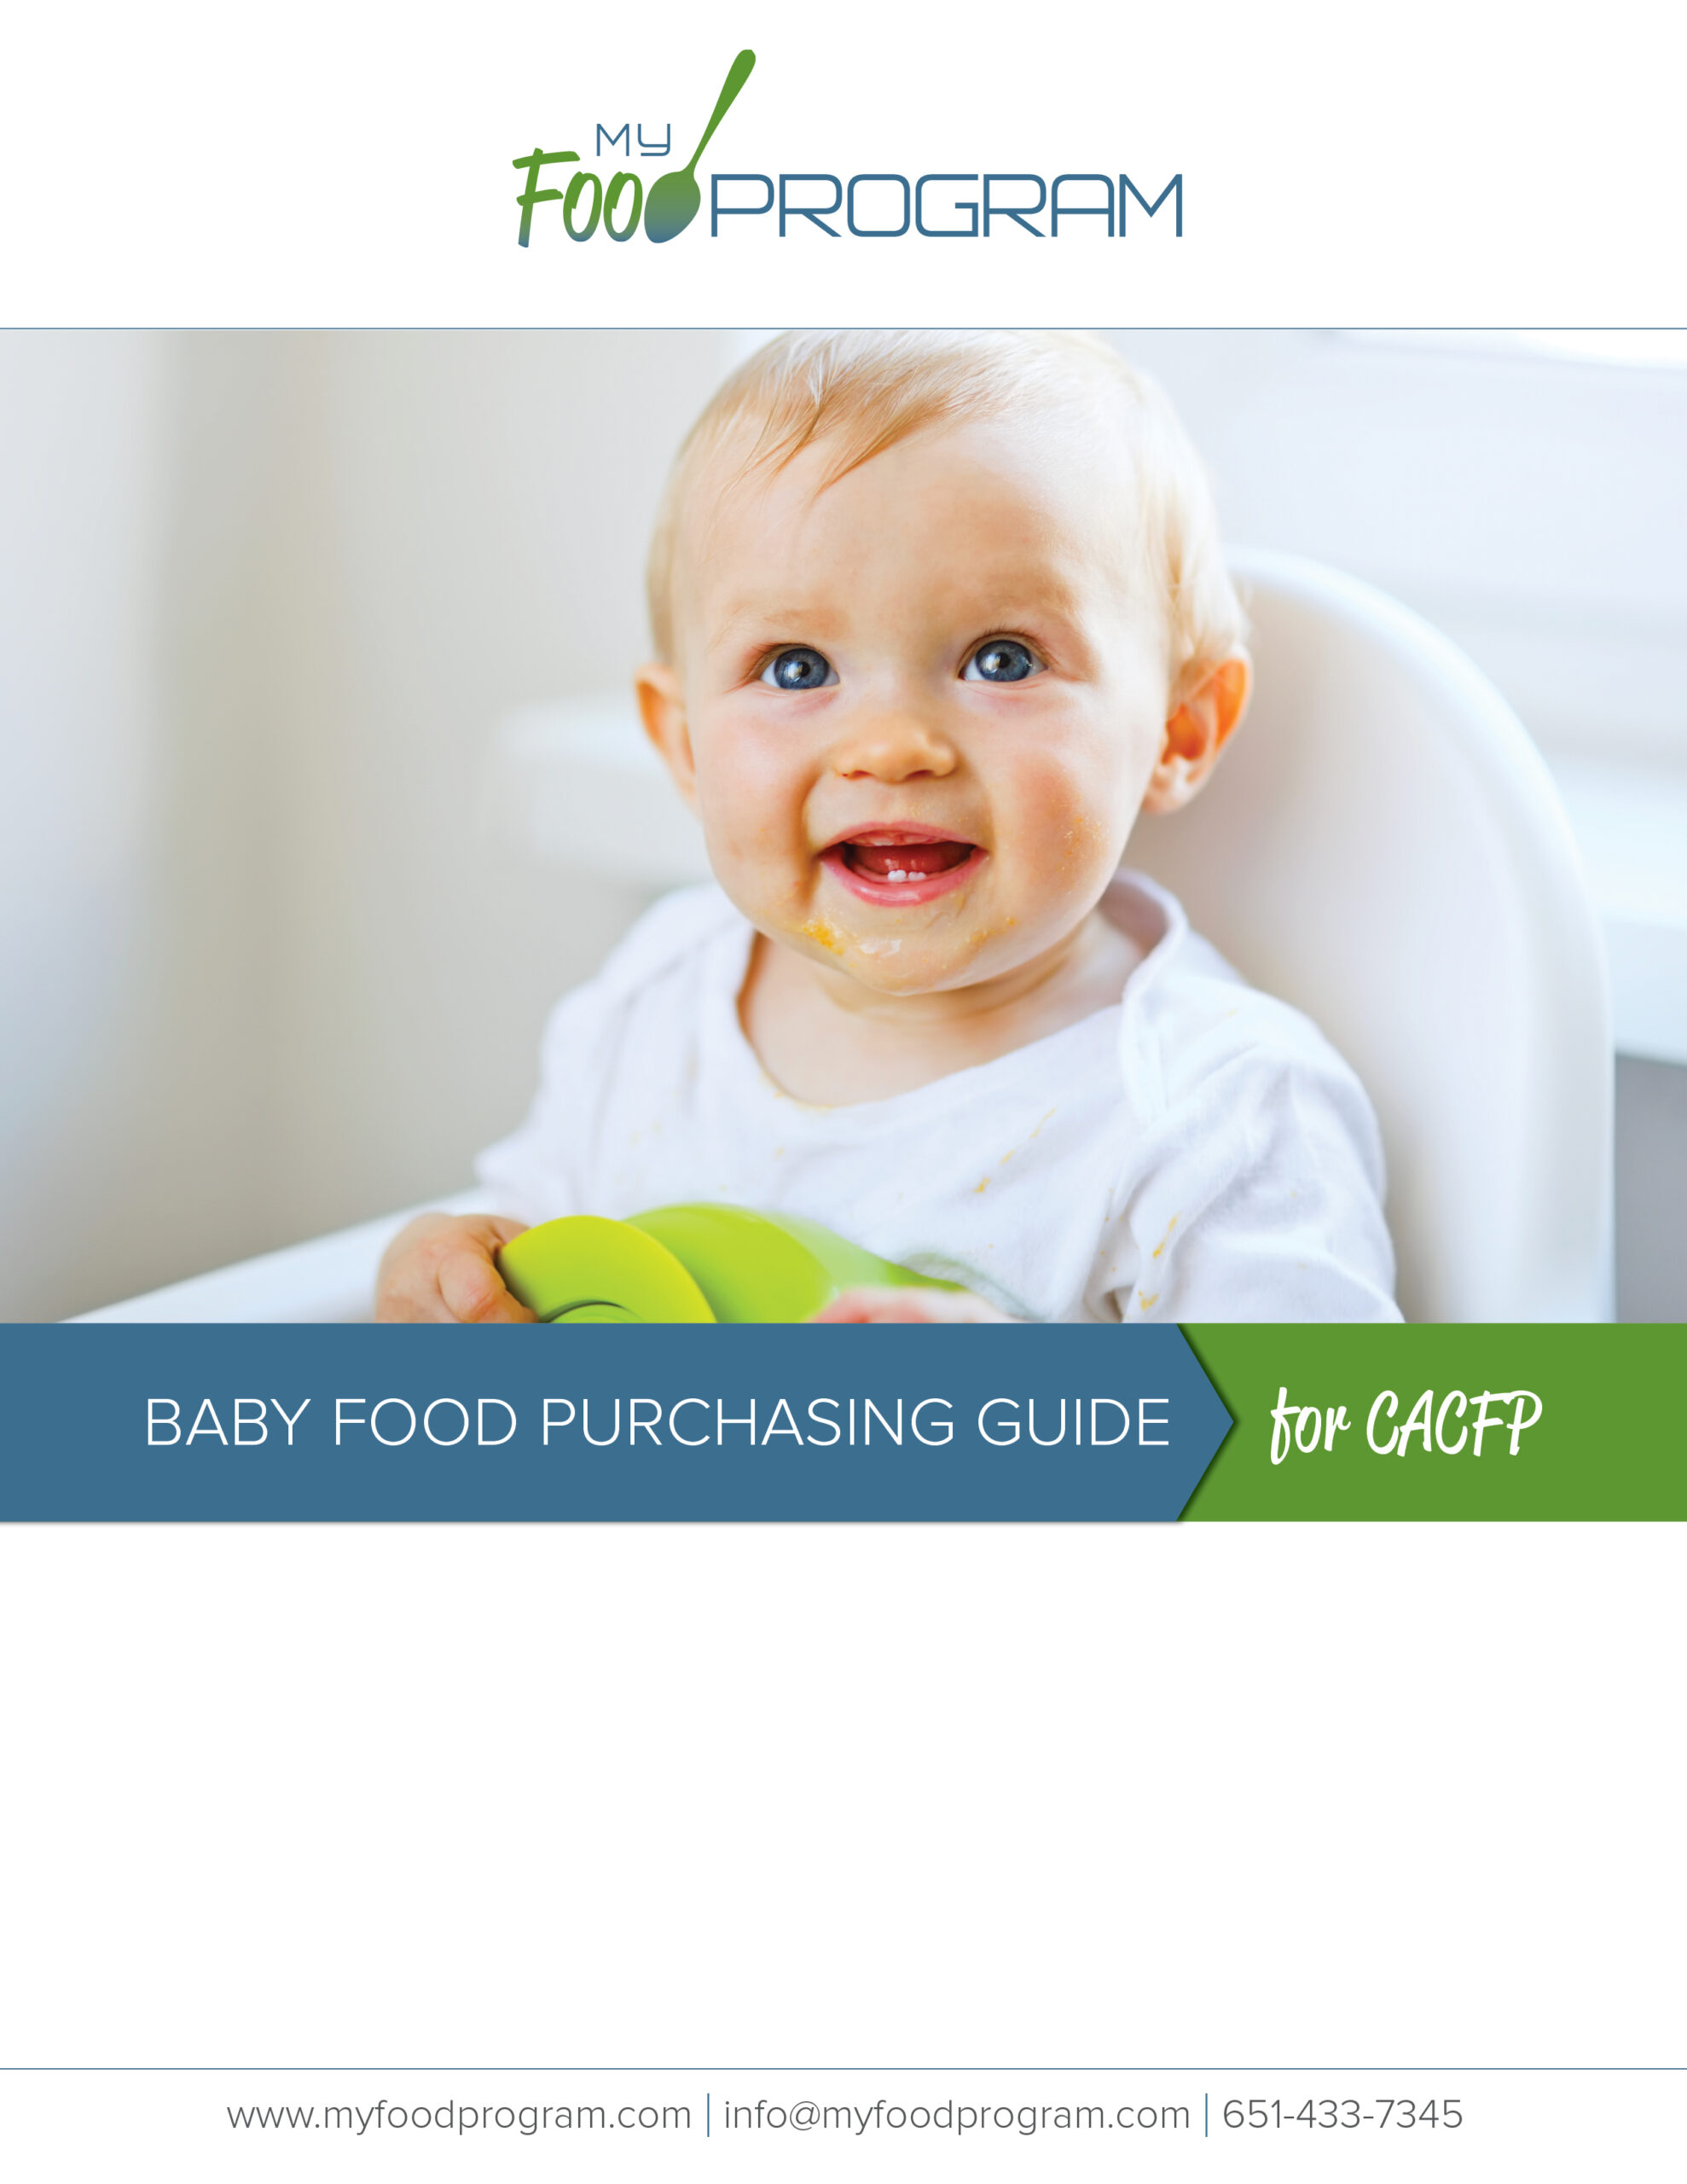 My Food Program Baby Food Purchasing Guide